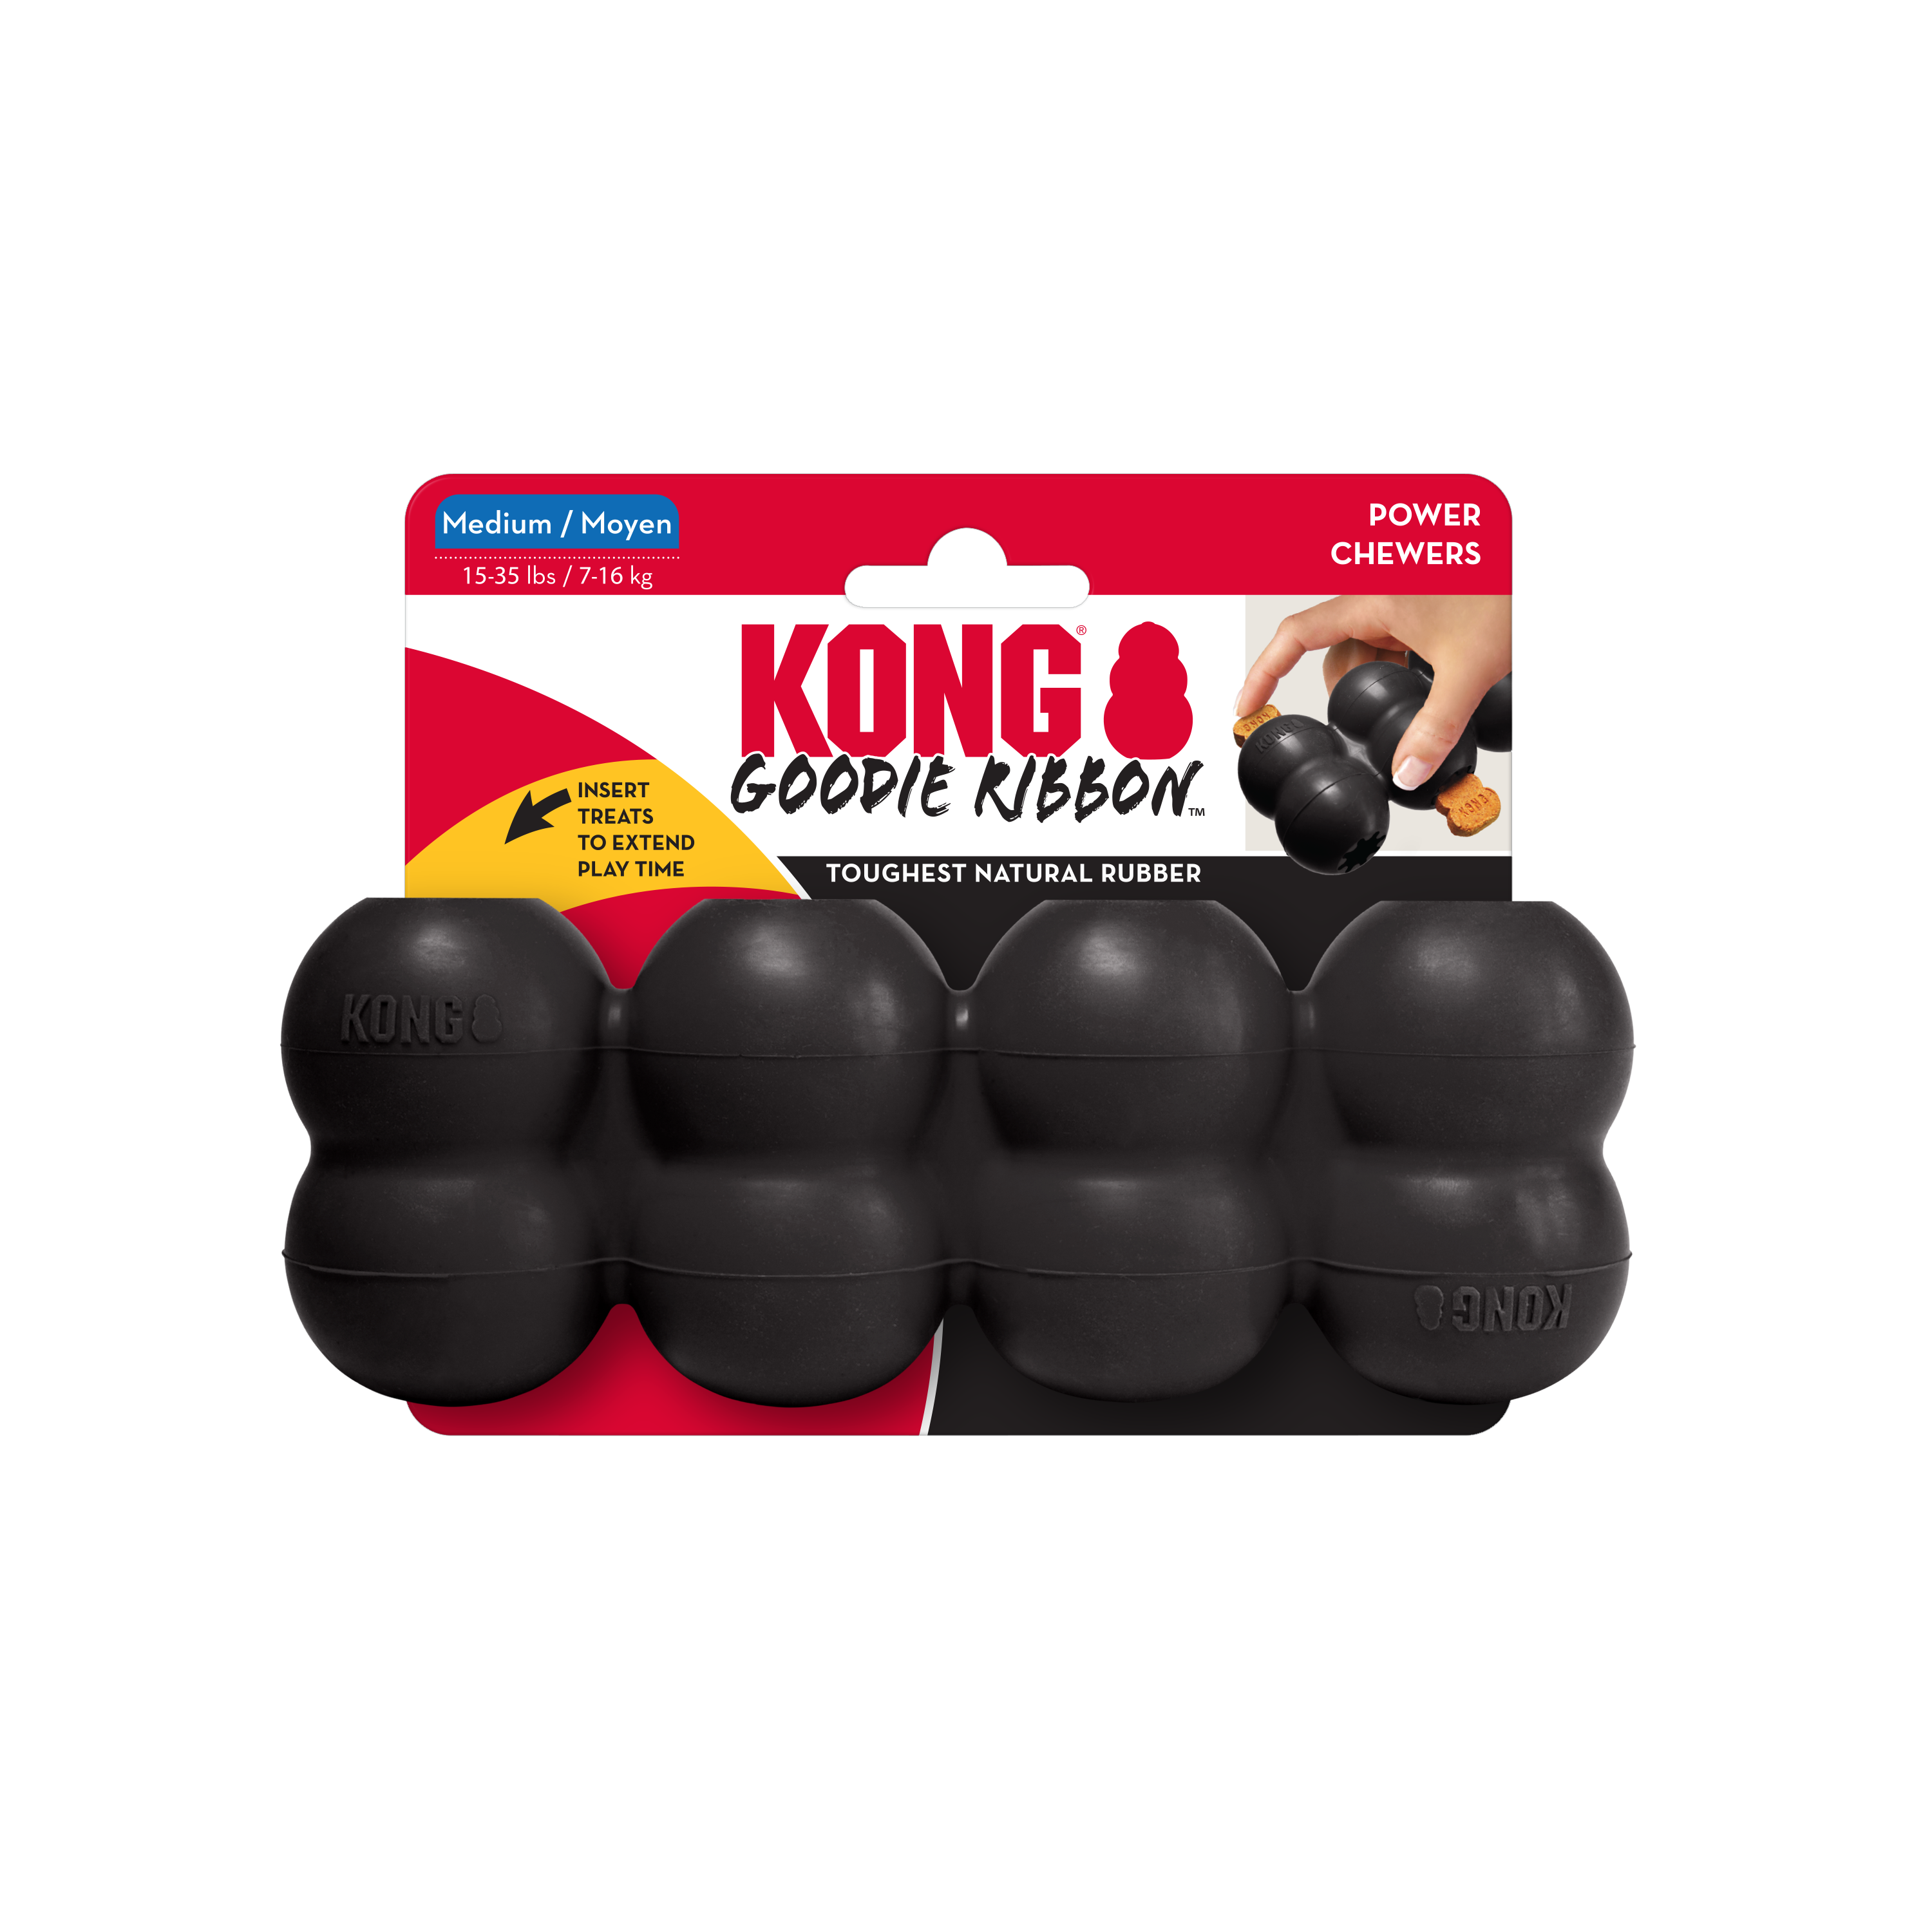 KONG Extreme Goodie Ribbon onpack product image